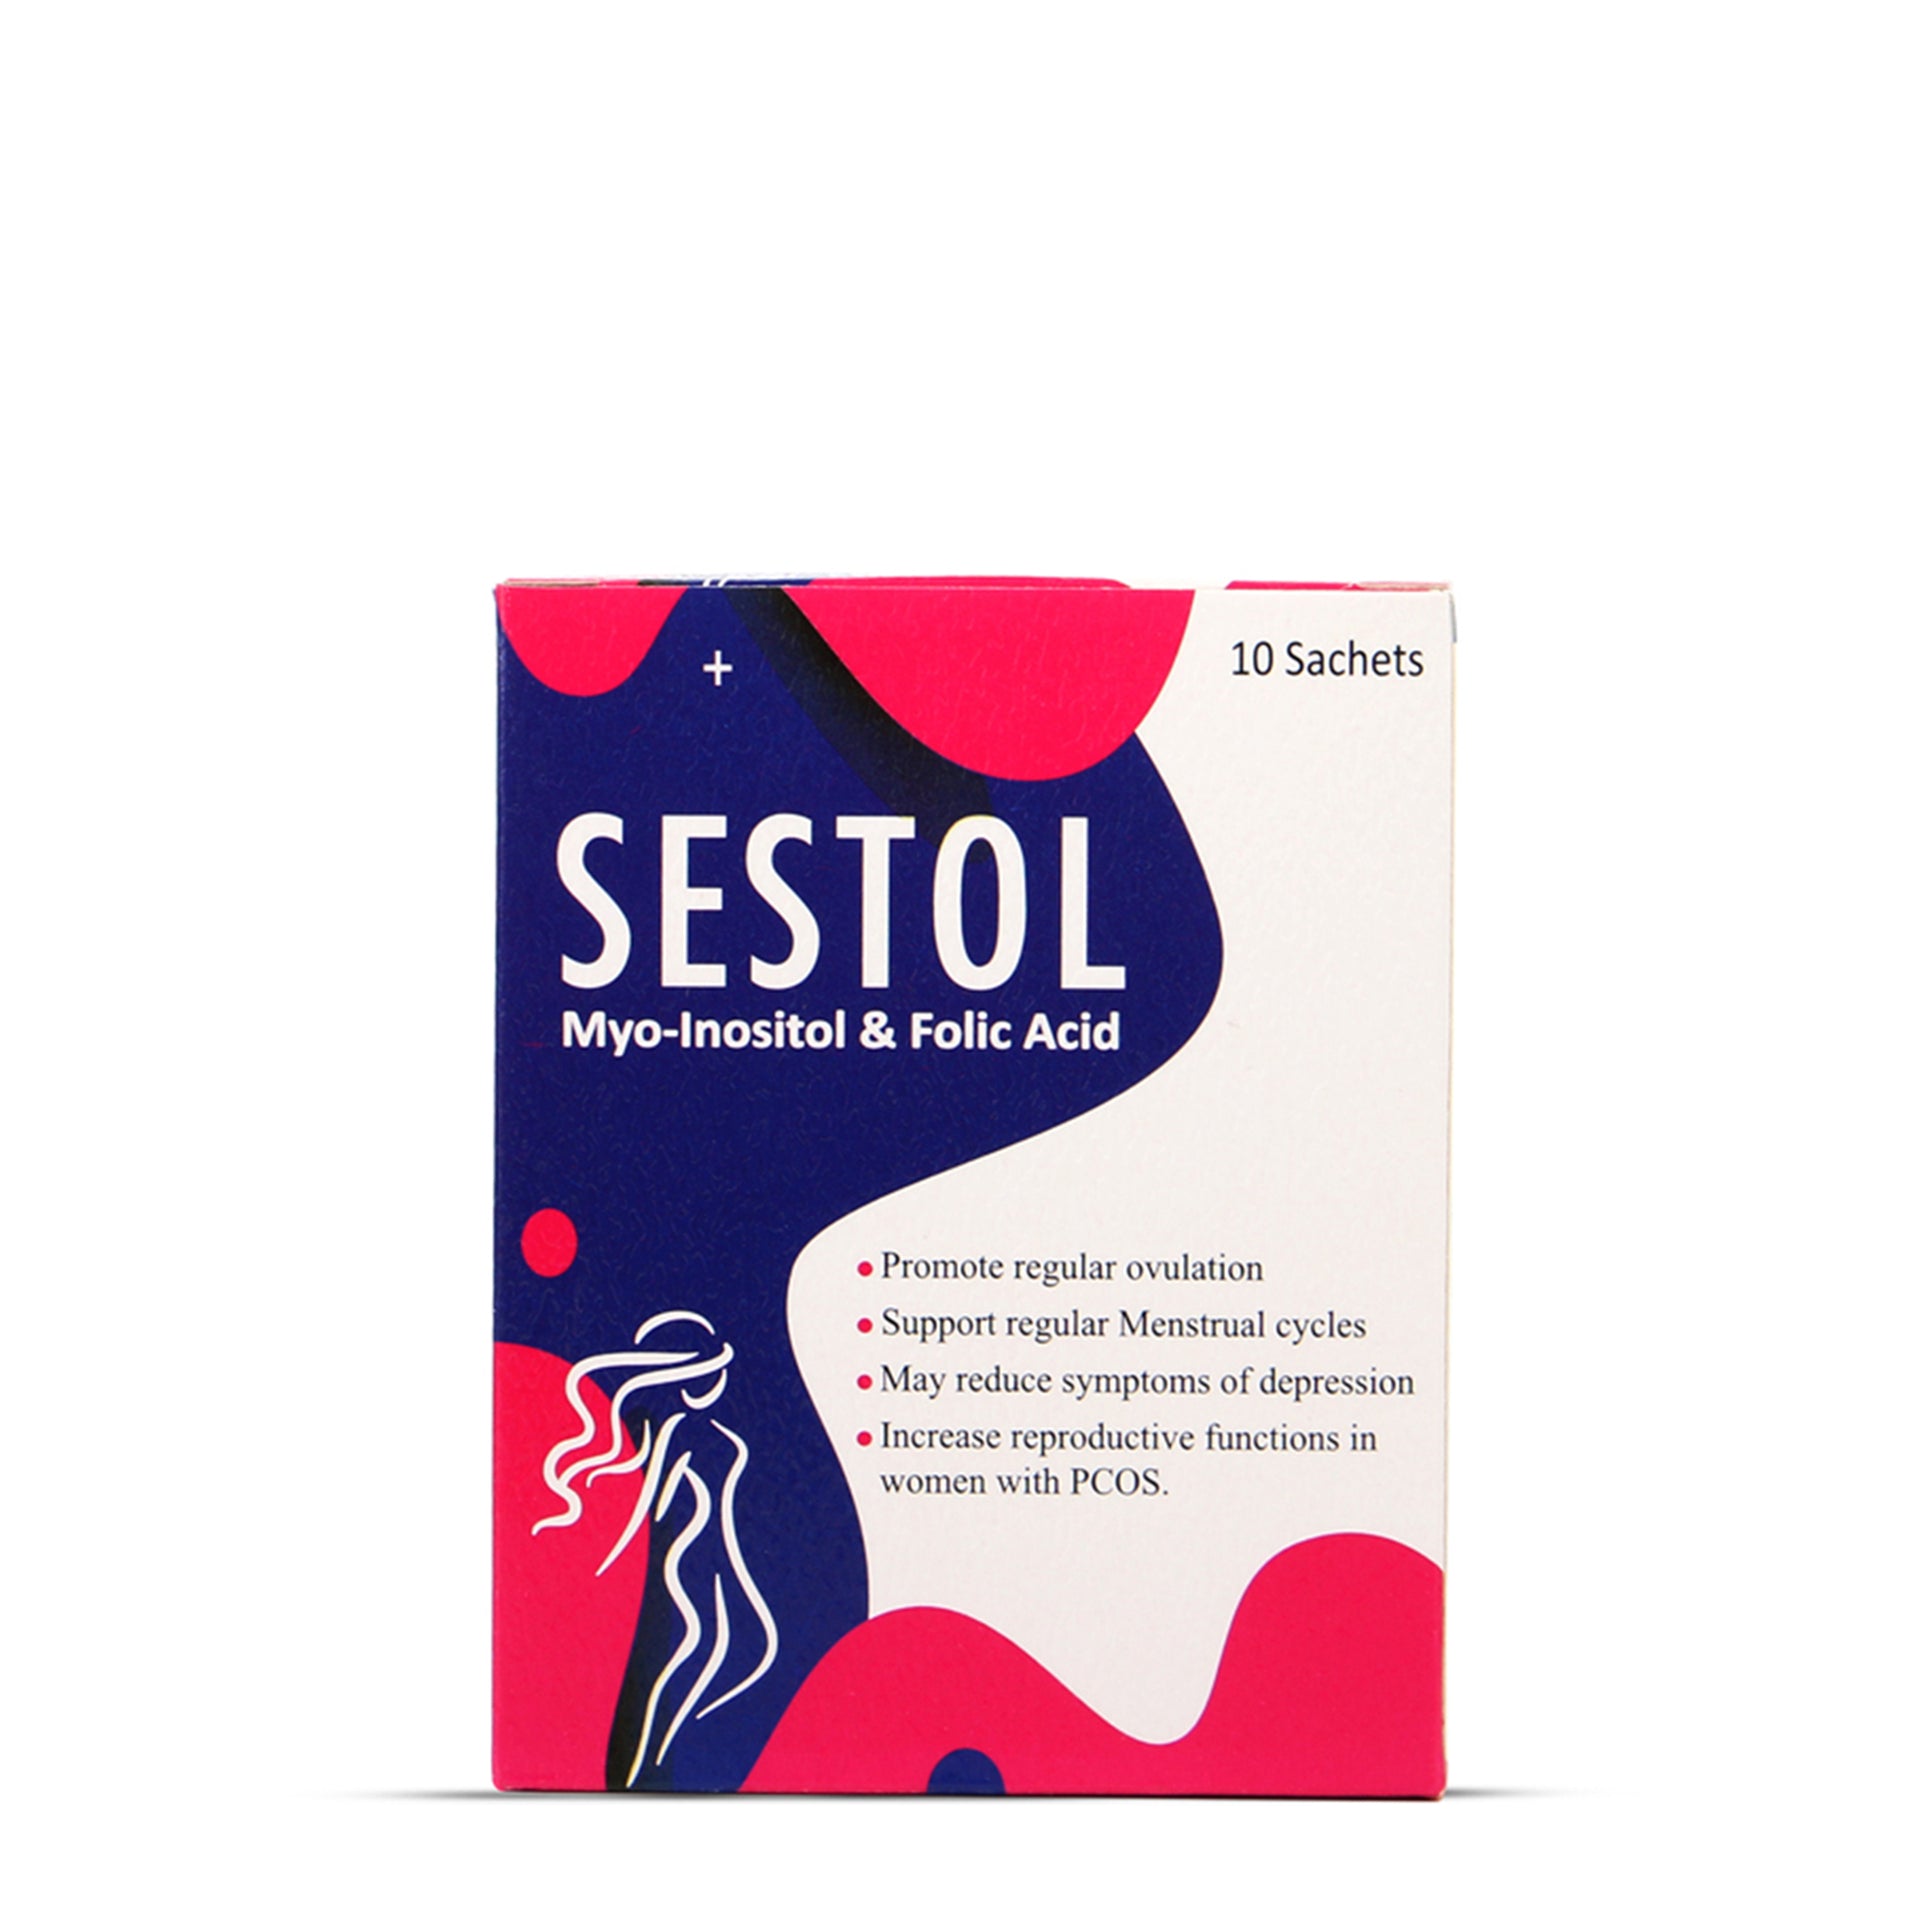 Sestol Sachet | Myo-Inositol & Folic Acid Supplements